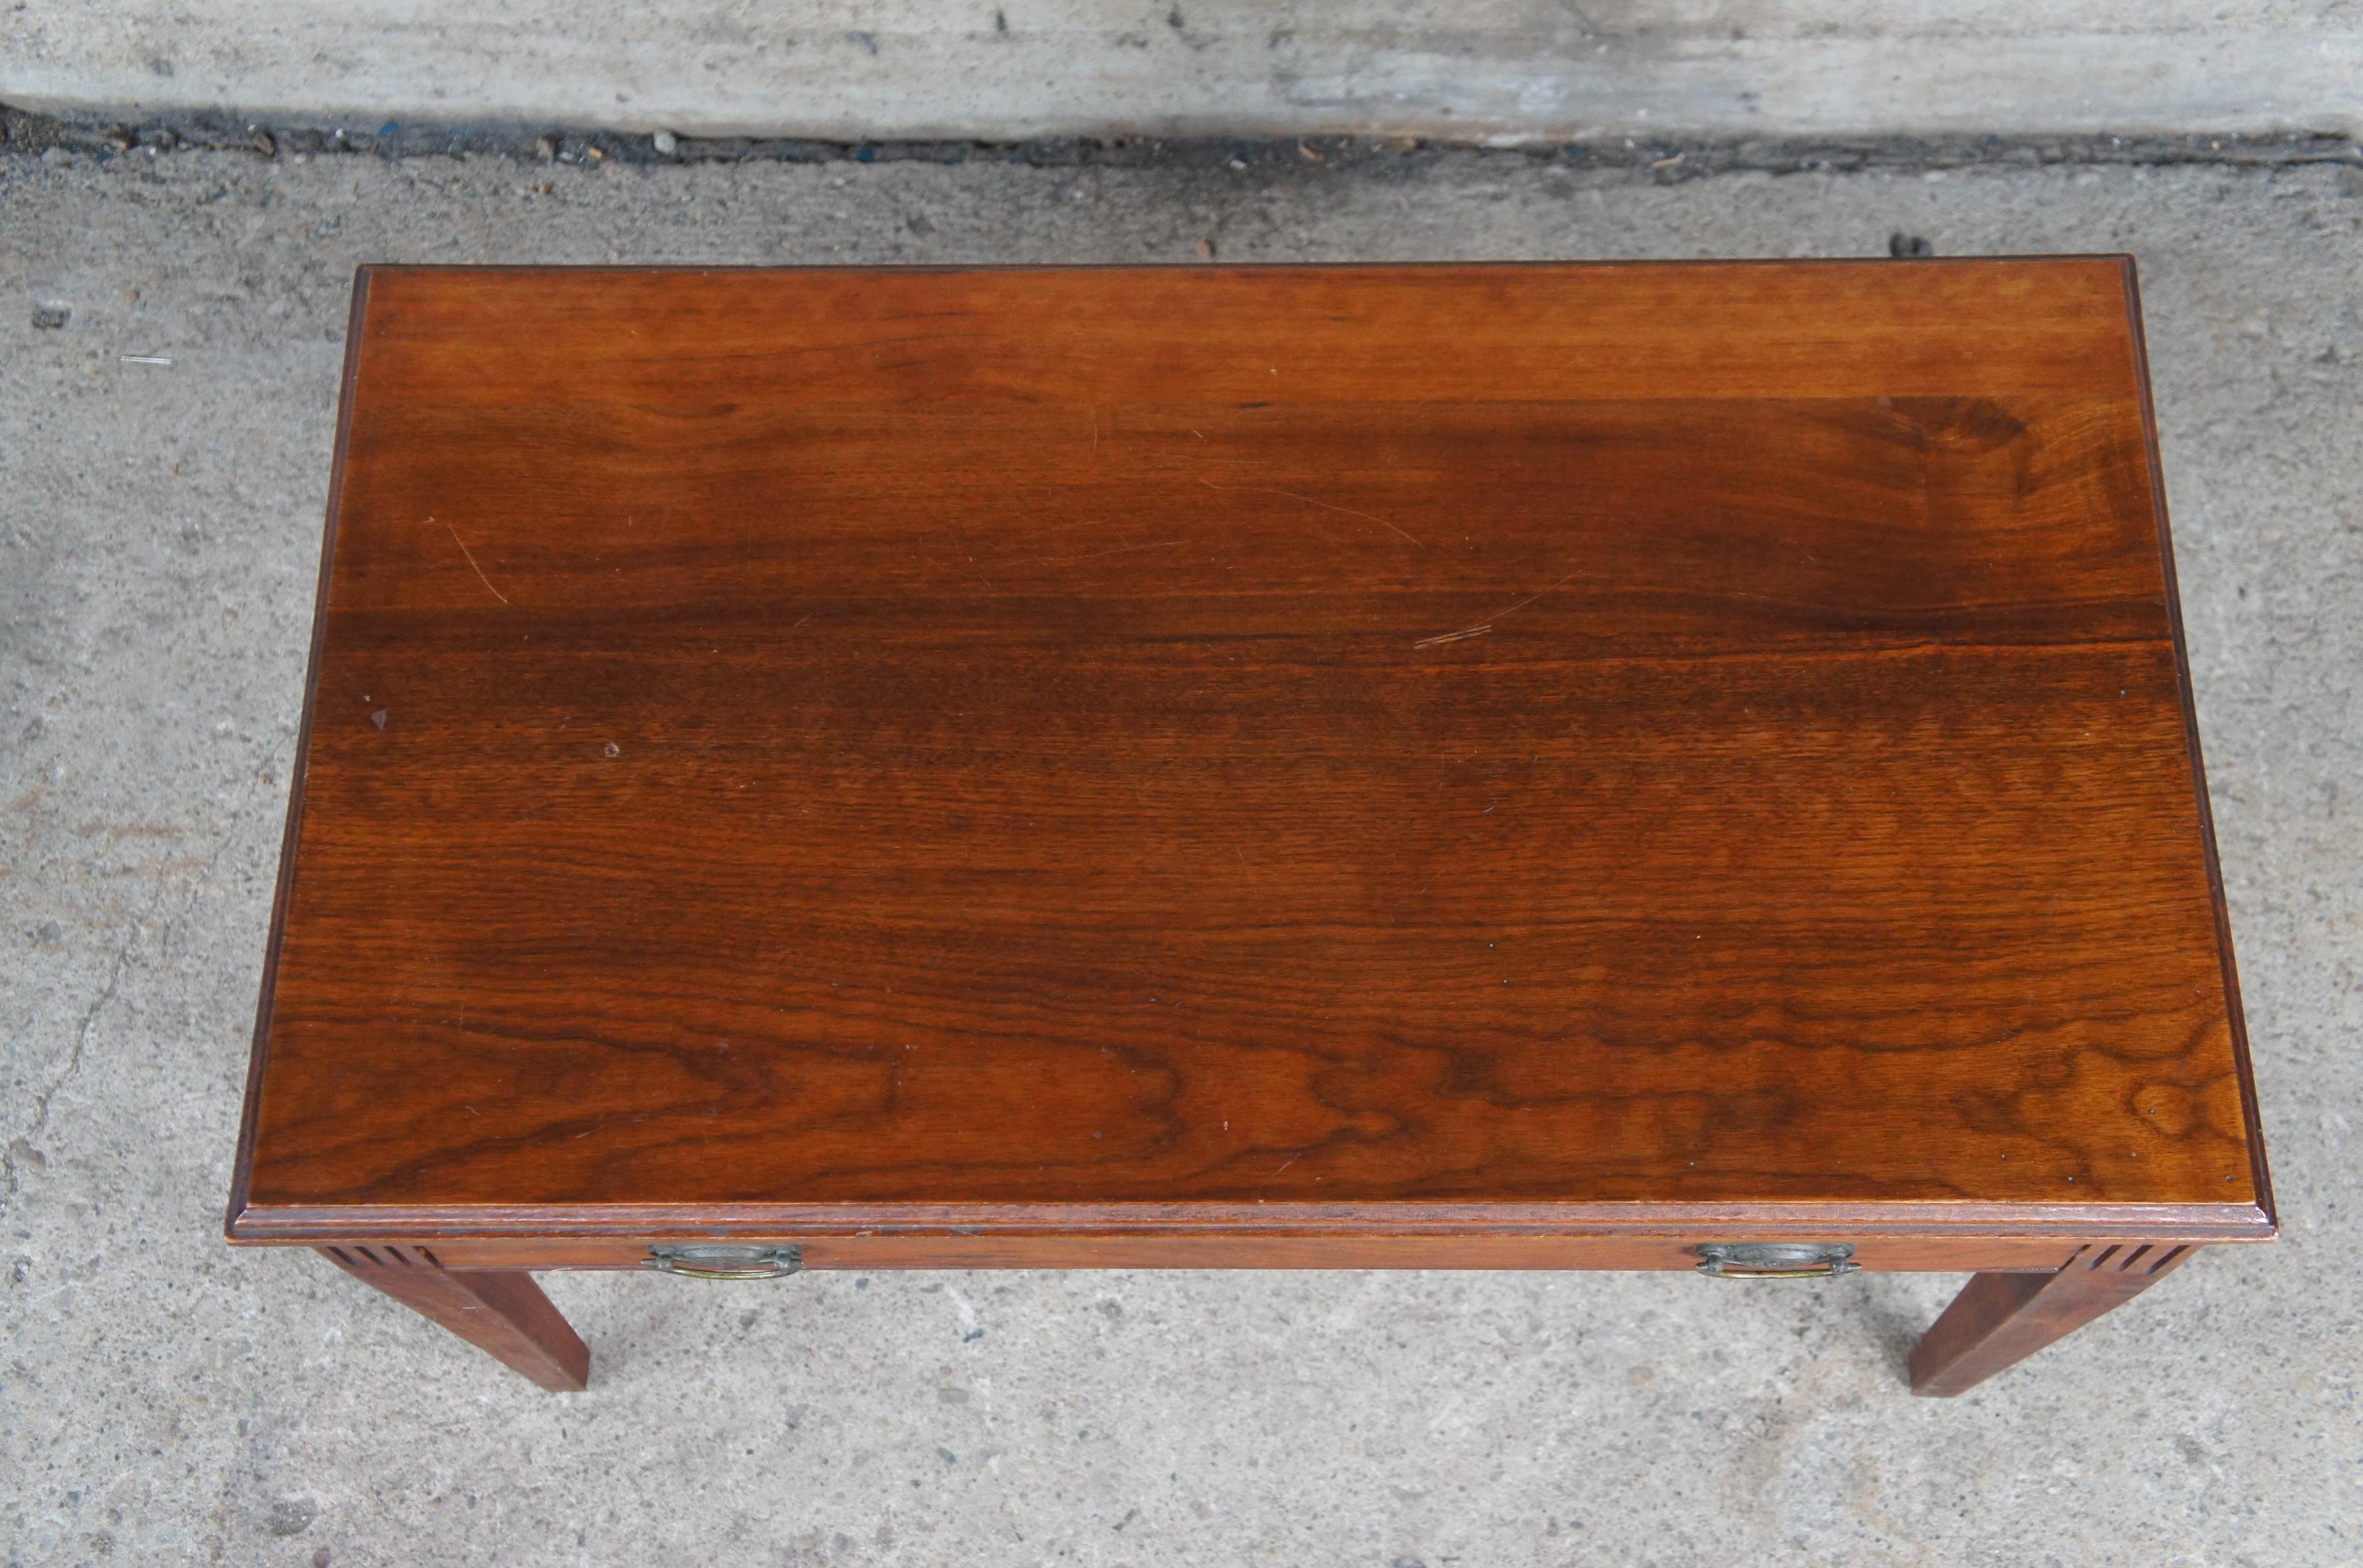 20th Century Midcentury Sheraton Revival Walnut Piano Foyer Bench Seat Coffee Table Drawer